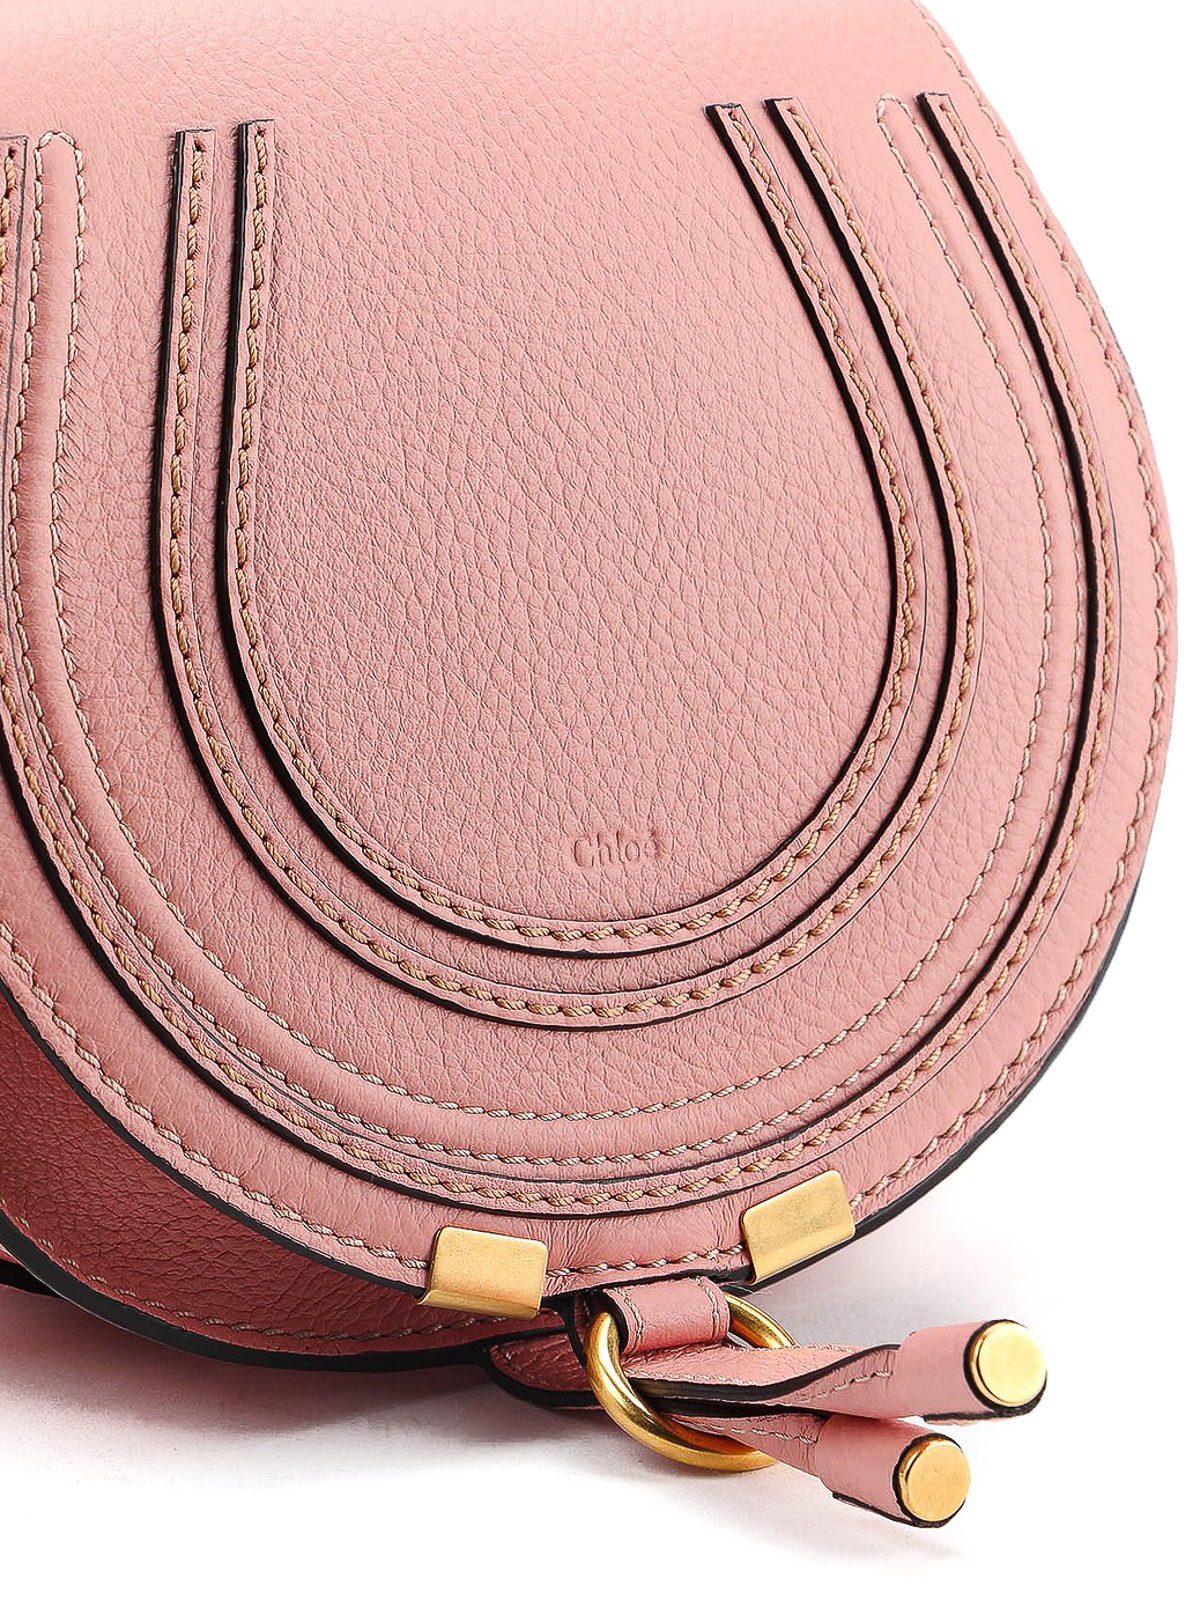 Mini Marcie pink leather bag